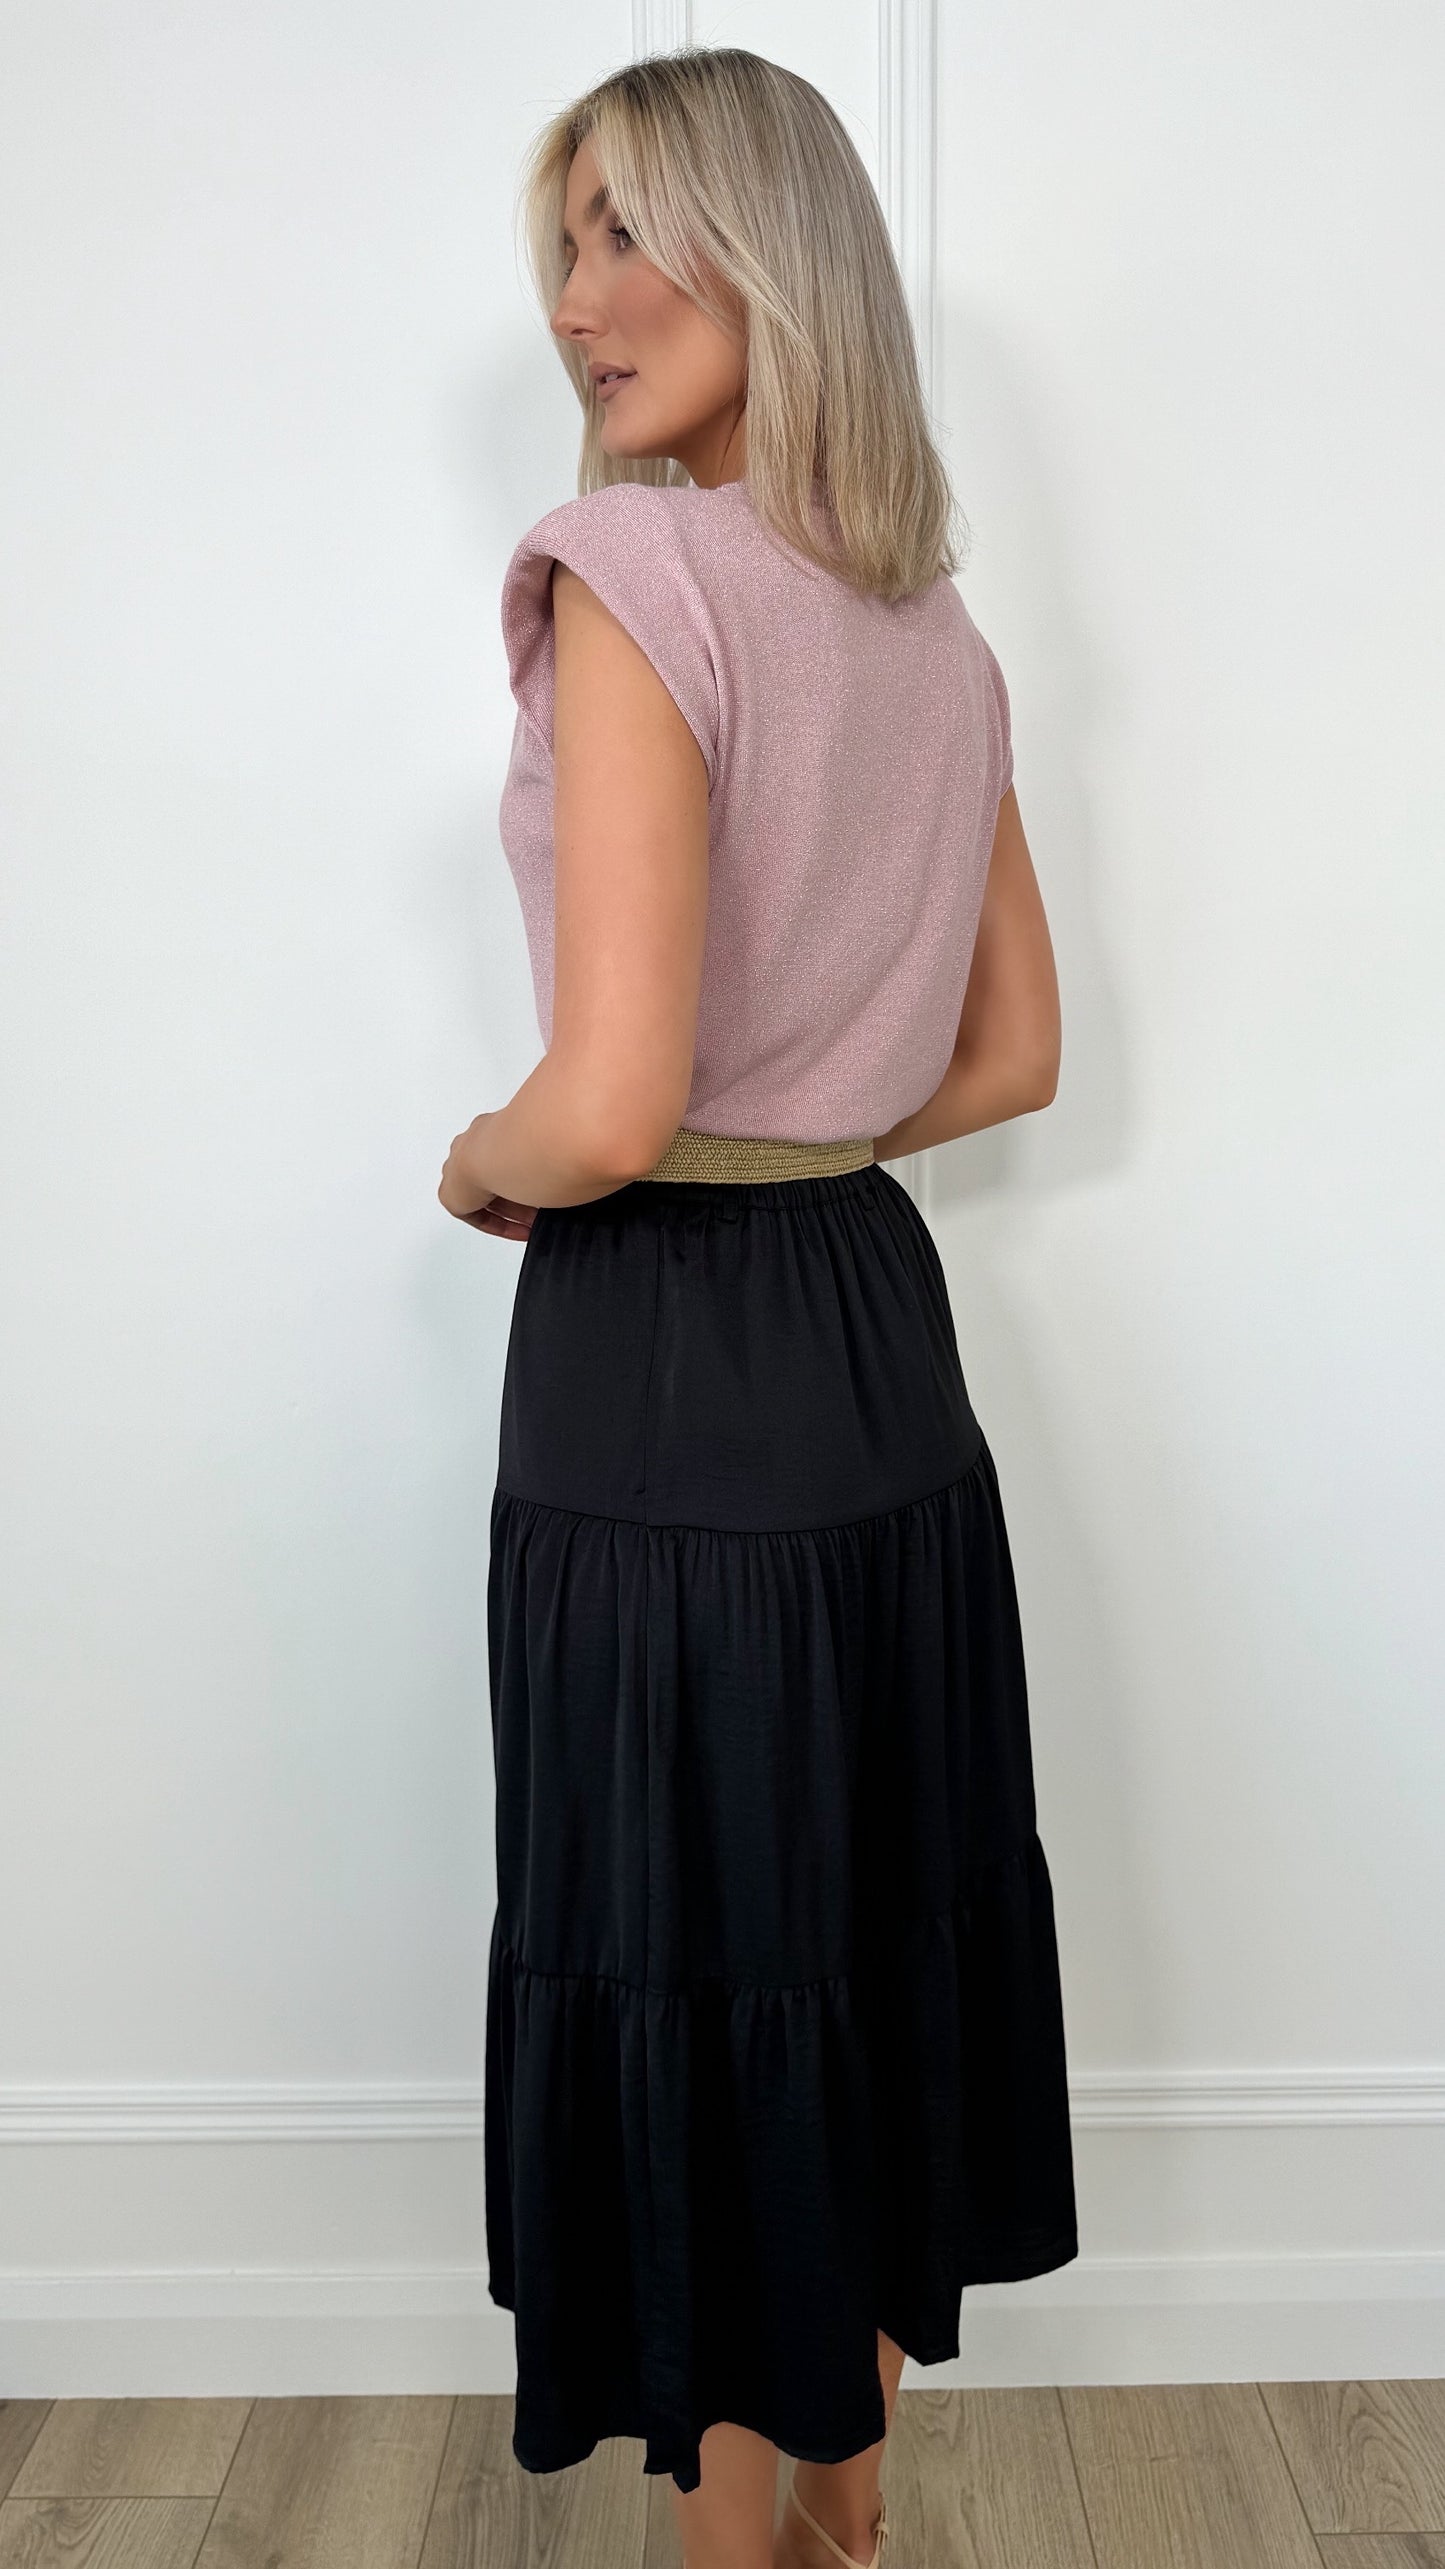 Black Midi Skirt with Belt